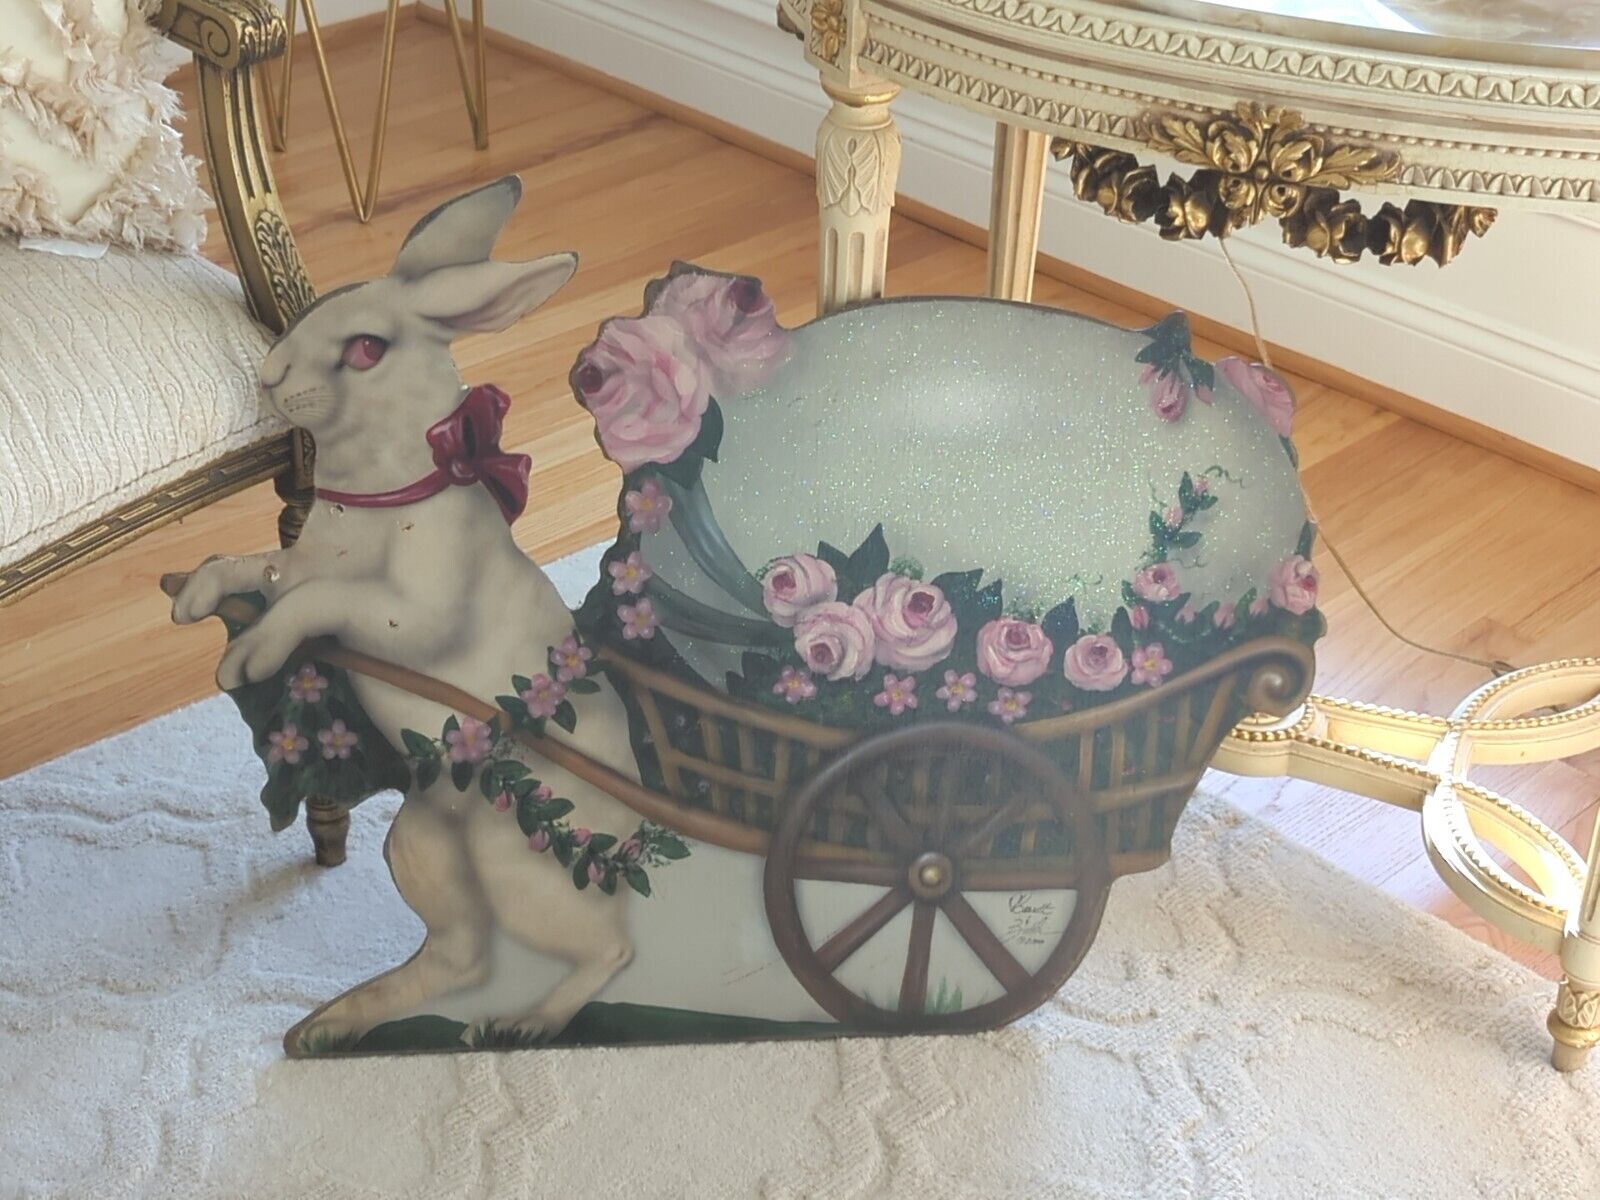 Bunny Egg Cart Boardwalk Originals Bonnie Barrett 2001 Hand Painted Pink Easter